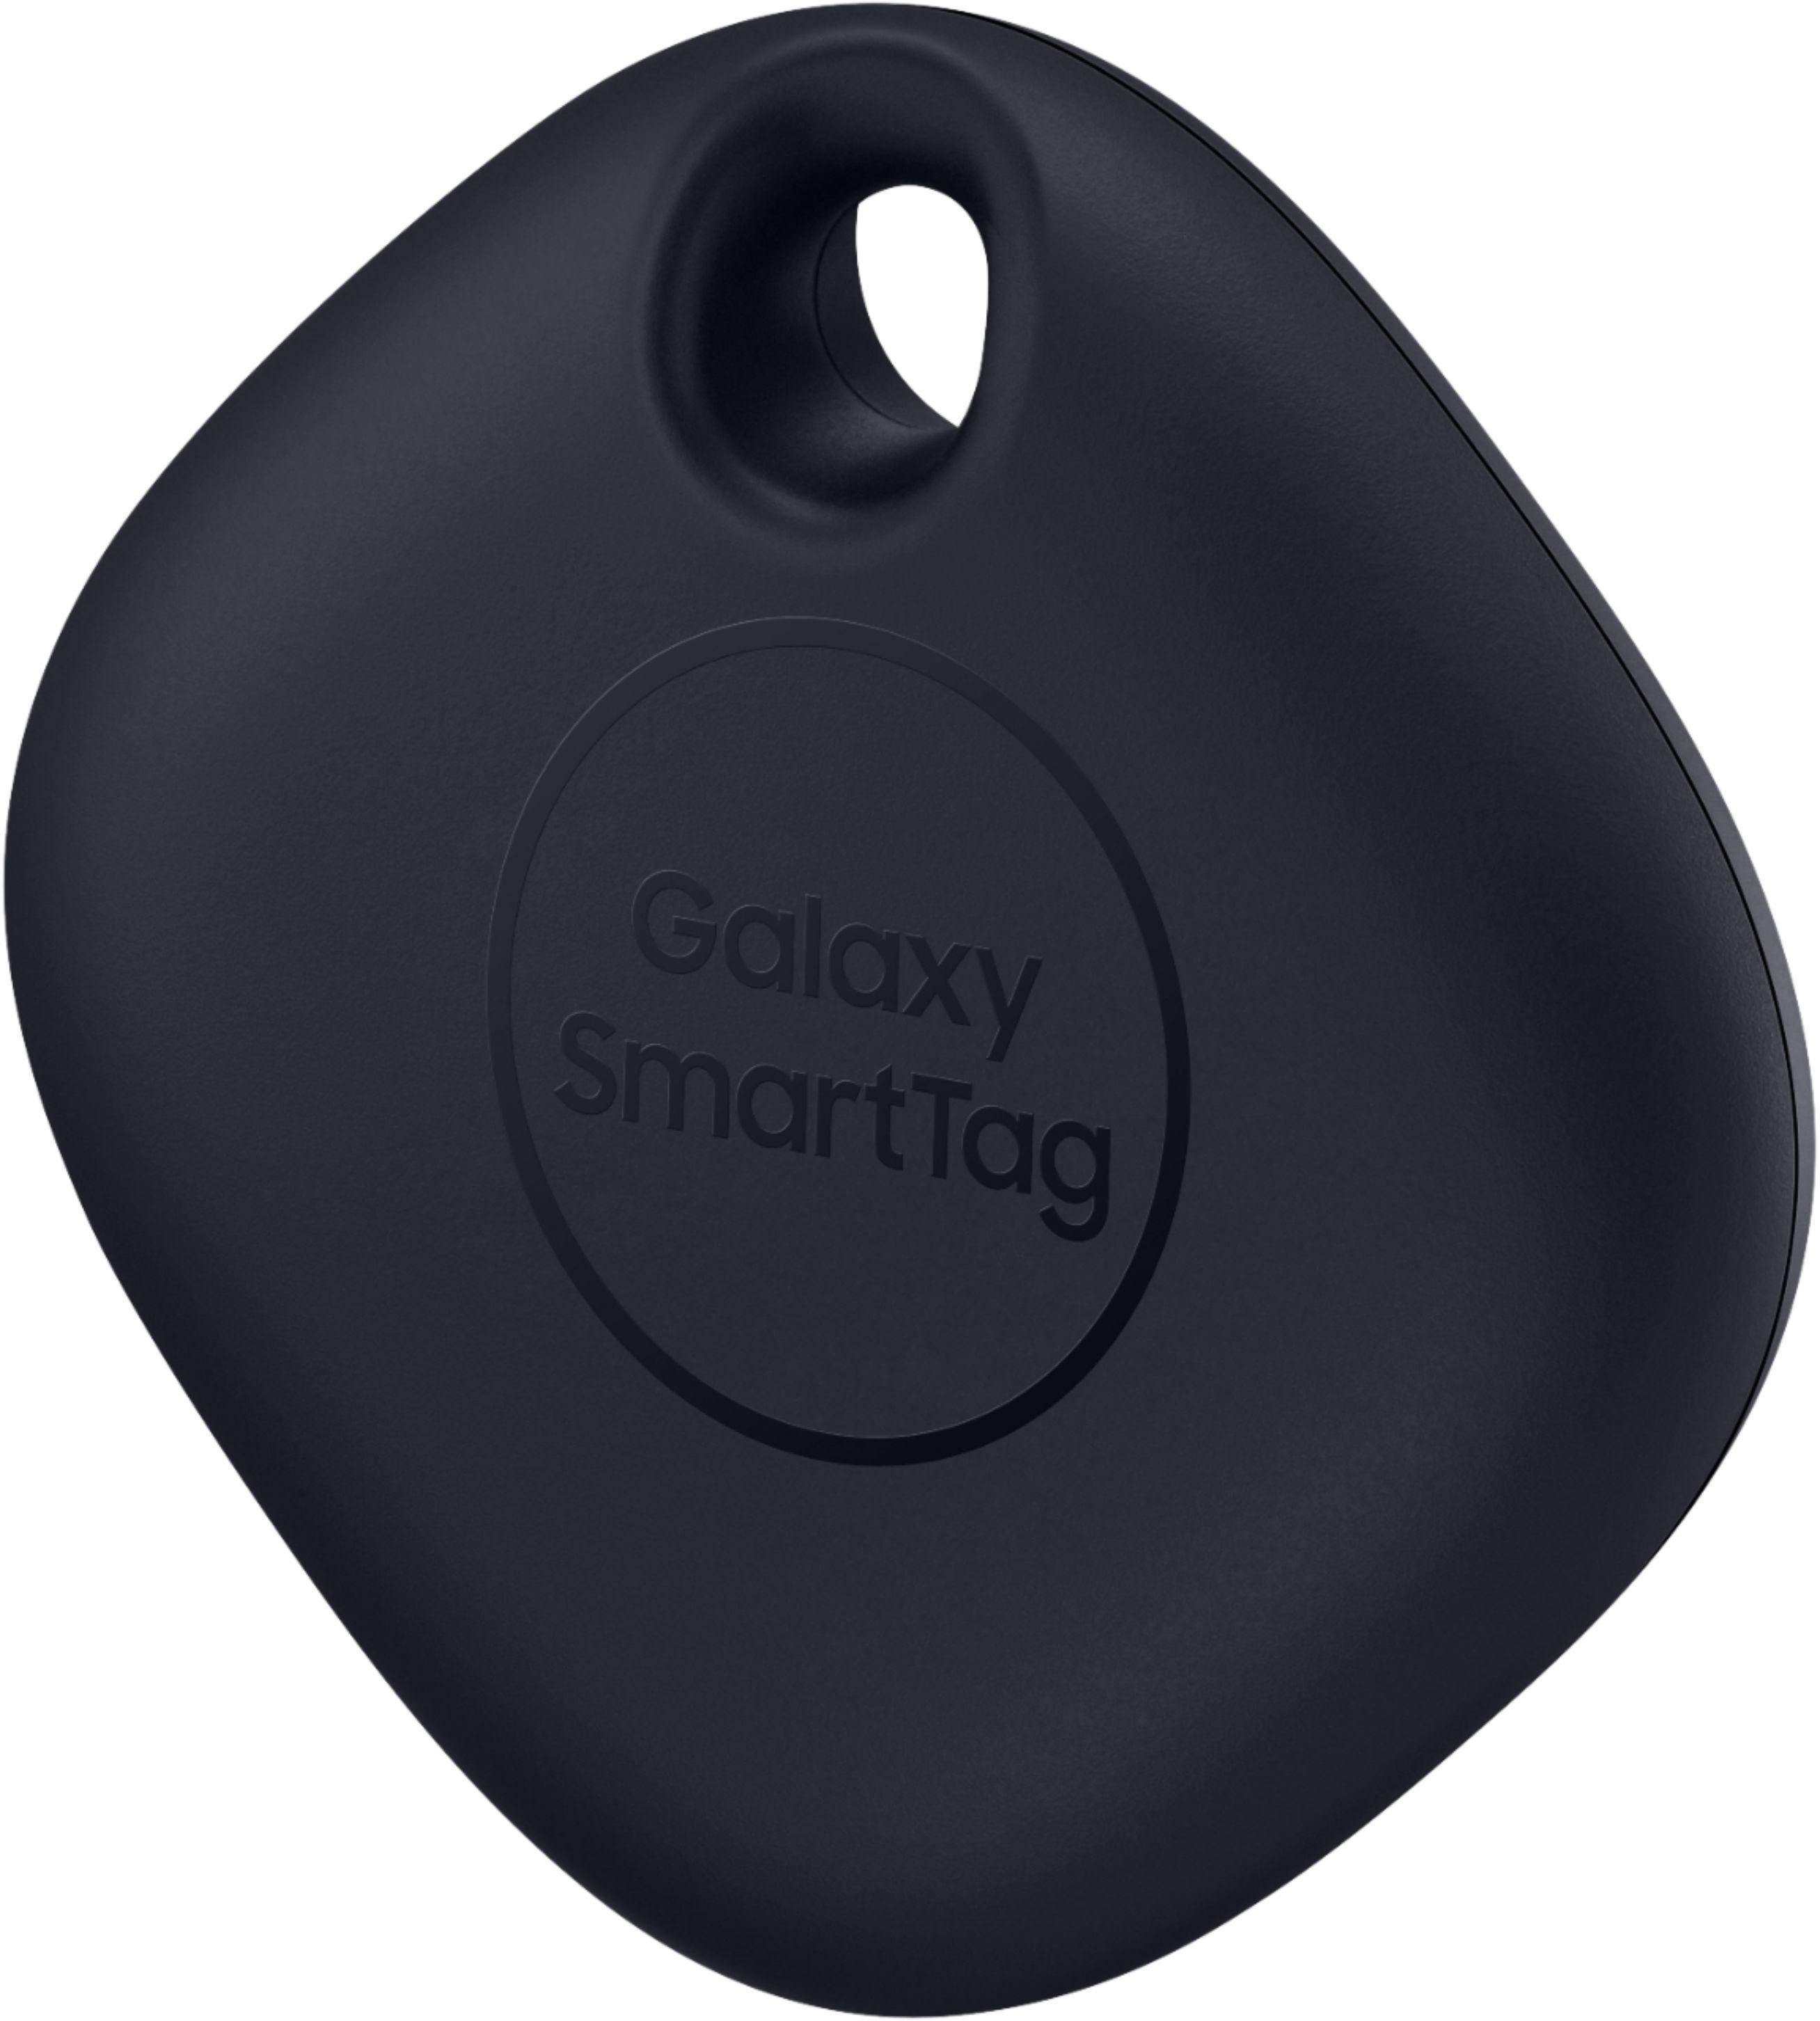 Apple AirTag vs Samsung Galaxy SmartTag: 10 key differences